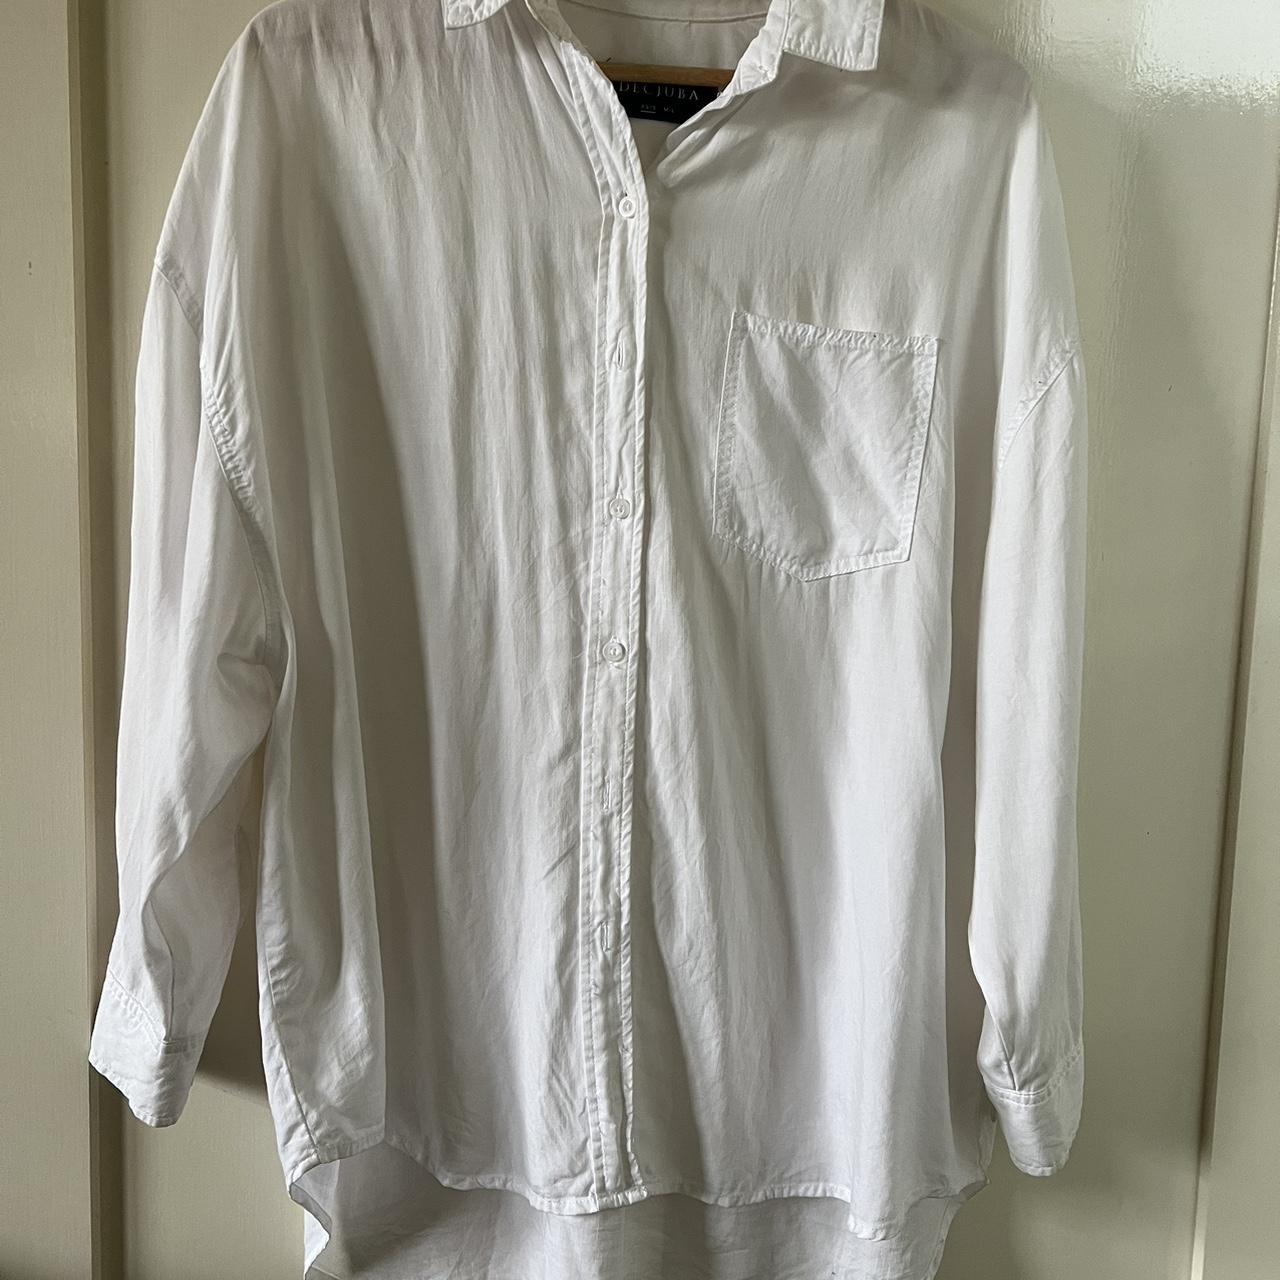 Decjuba oversized white shirt size xs/s #decubja... - Depop